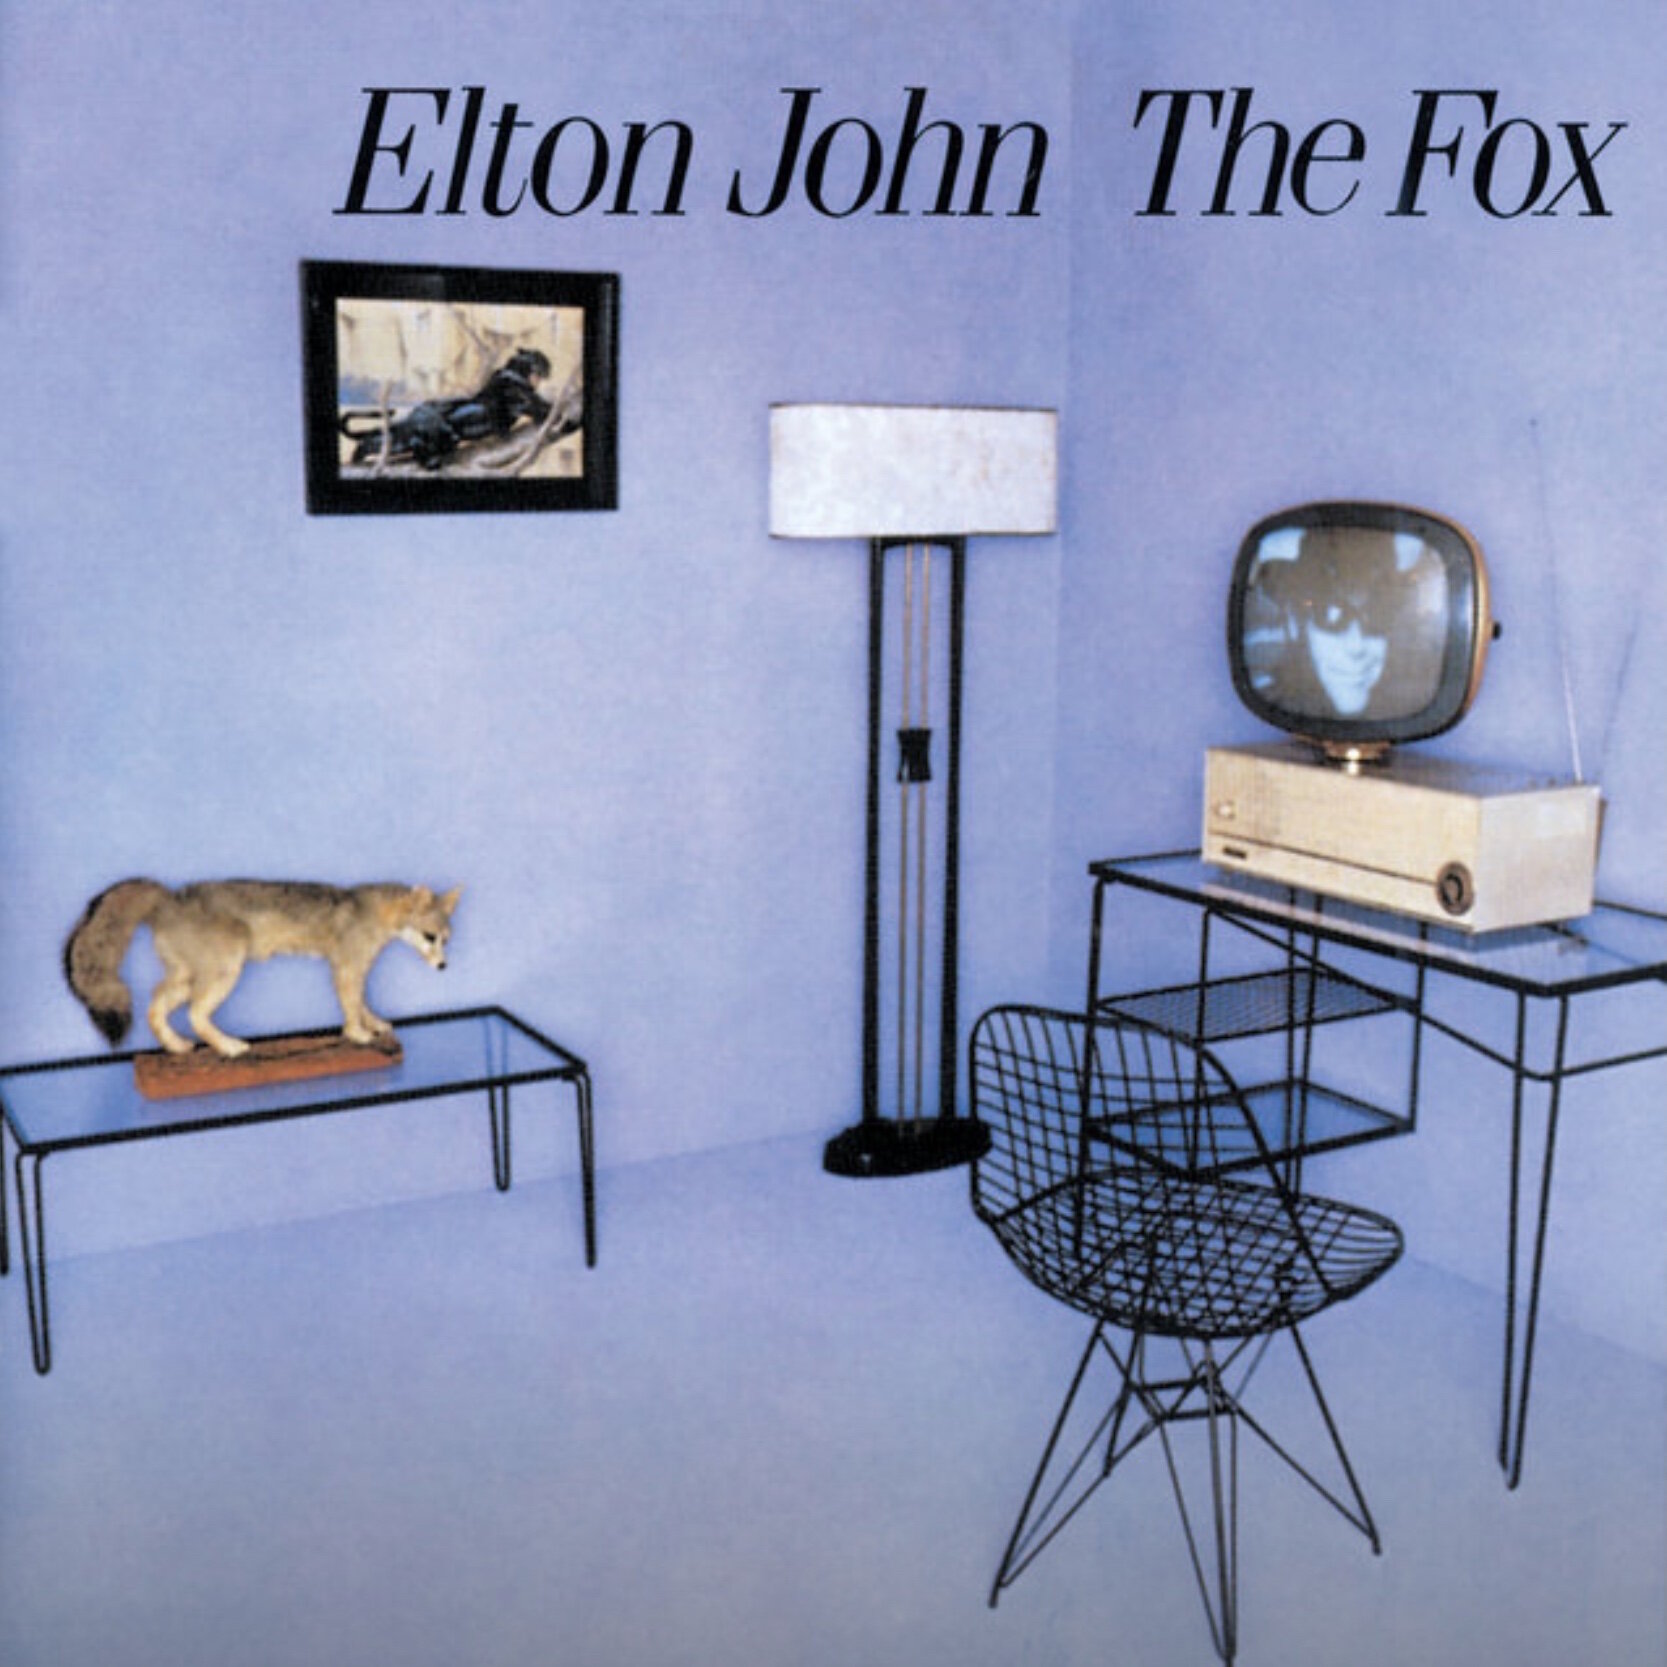 (4) The Fox - Elton John.jpg